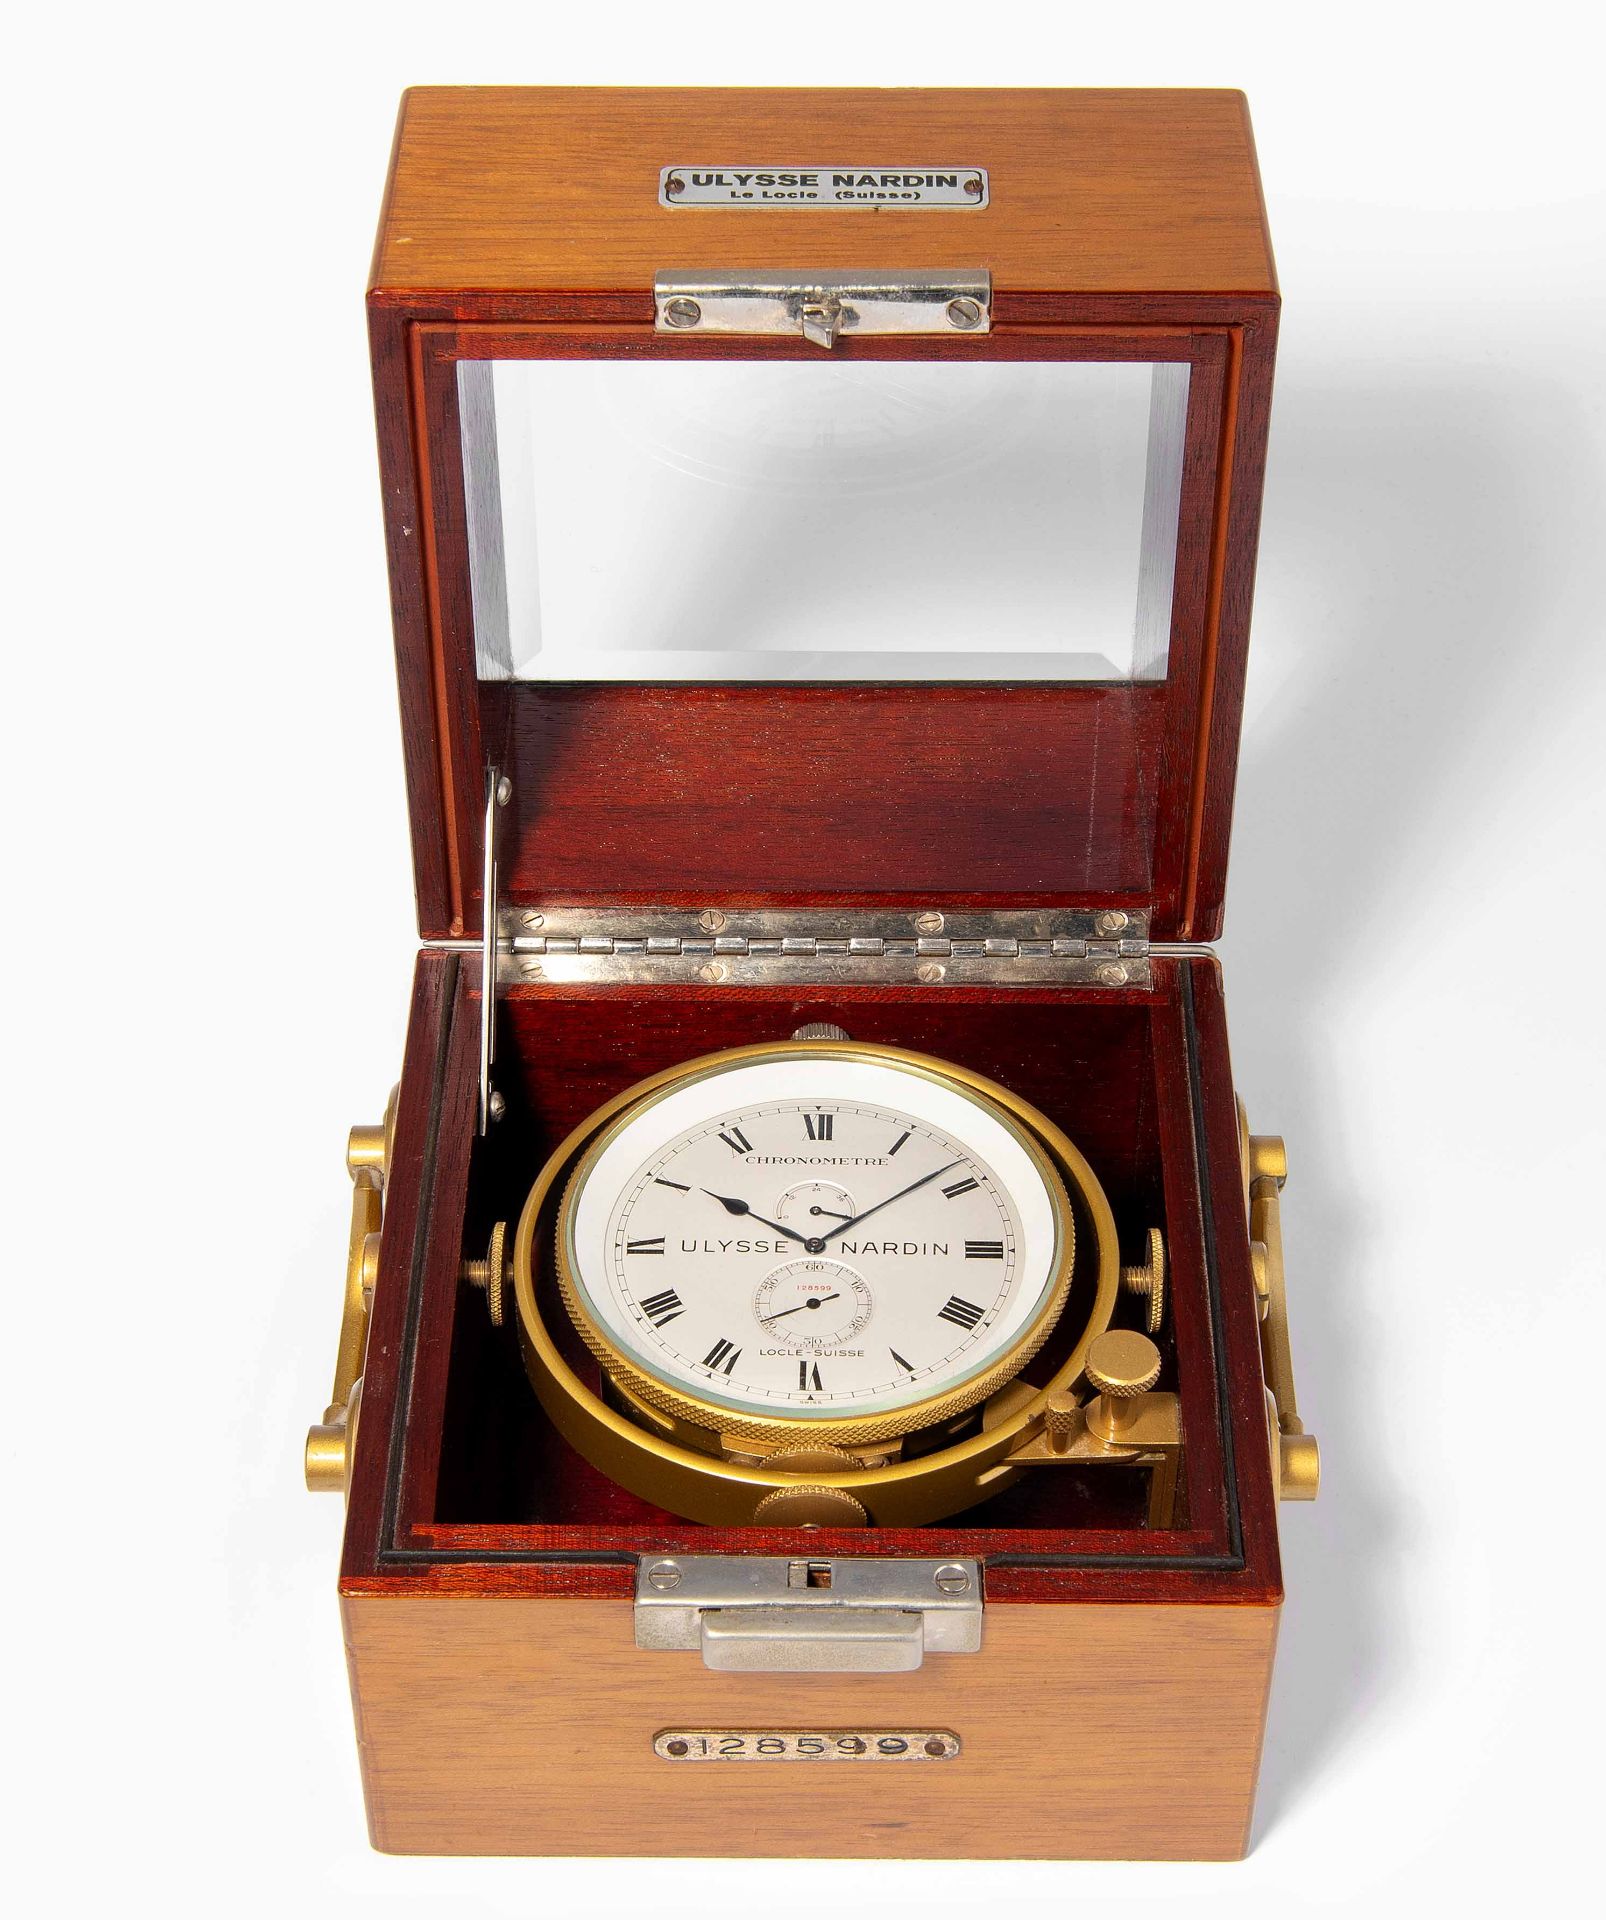 Schiffschronometer Ulysse Nardin